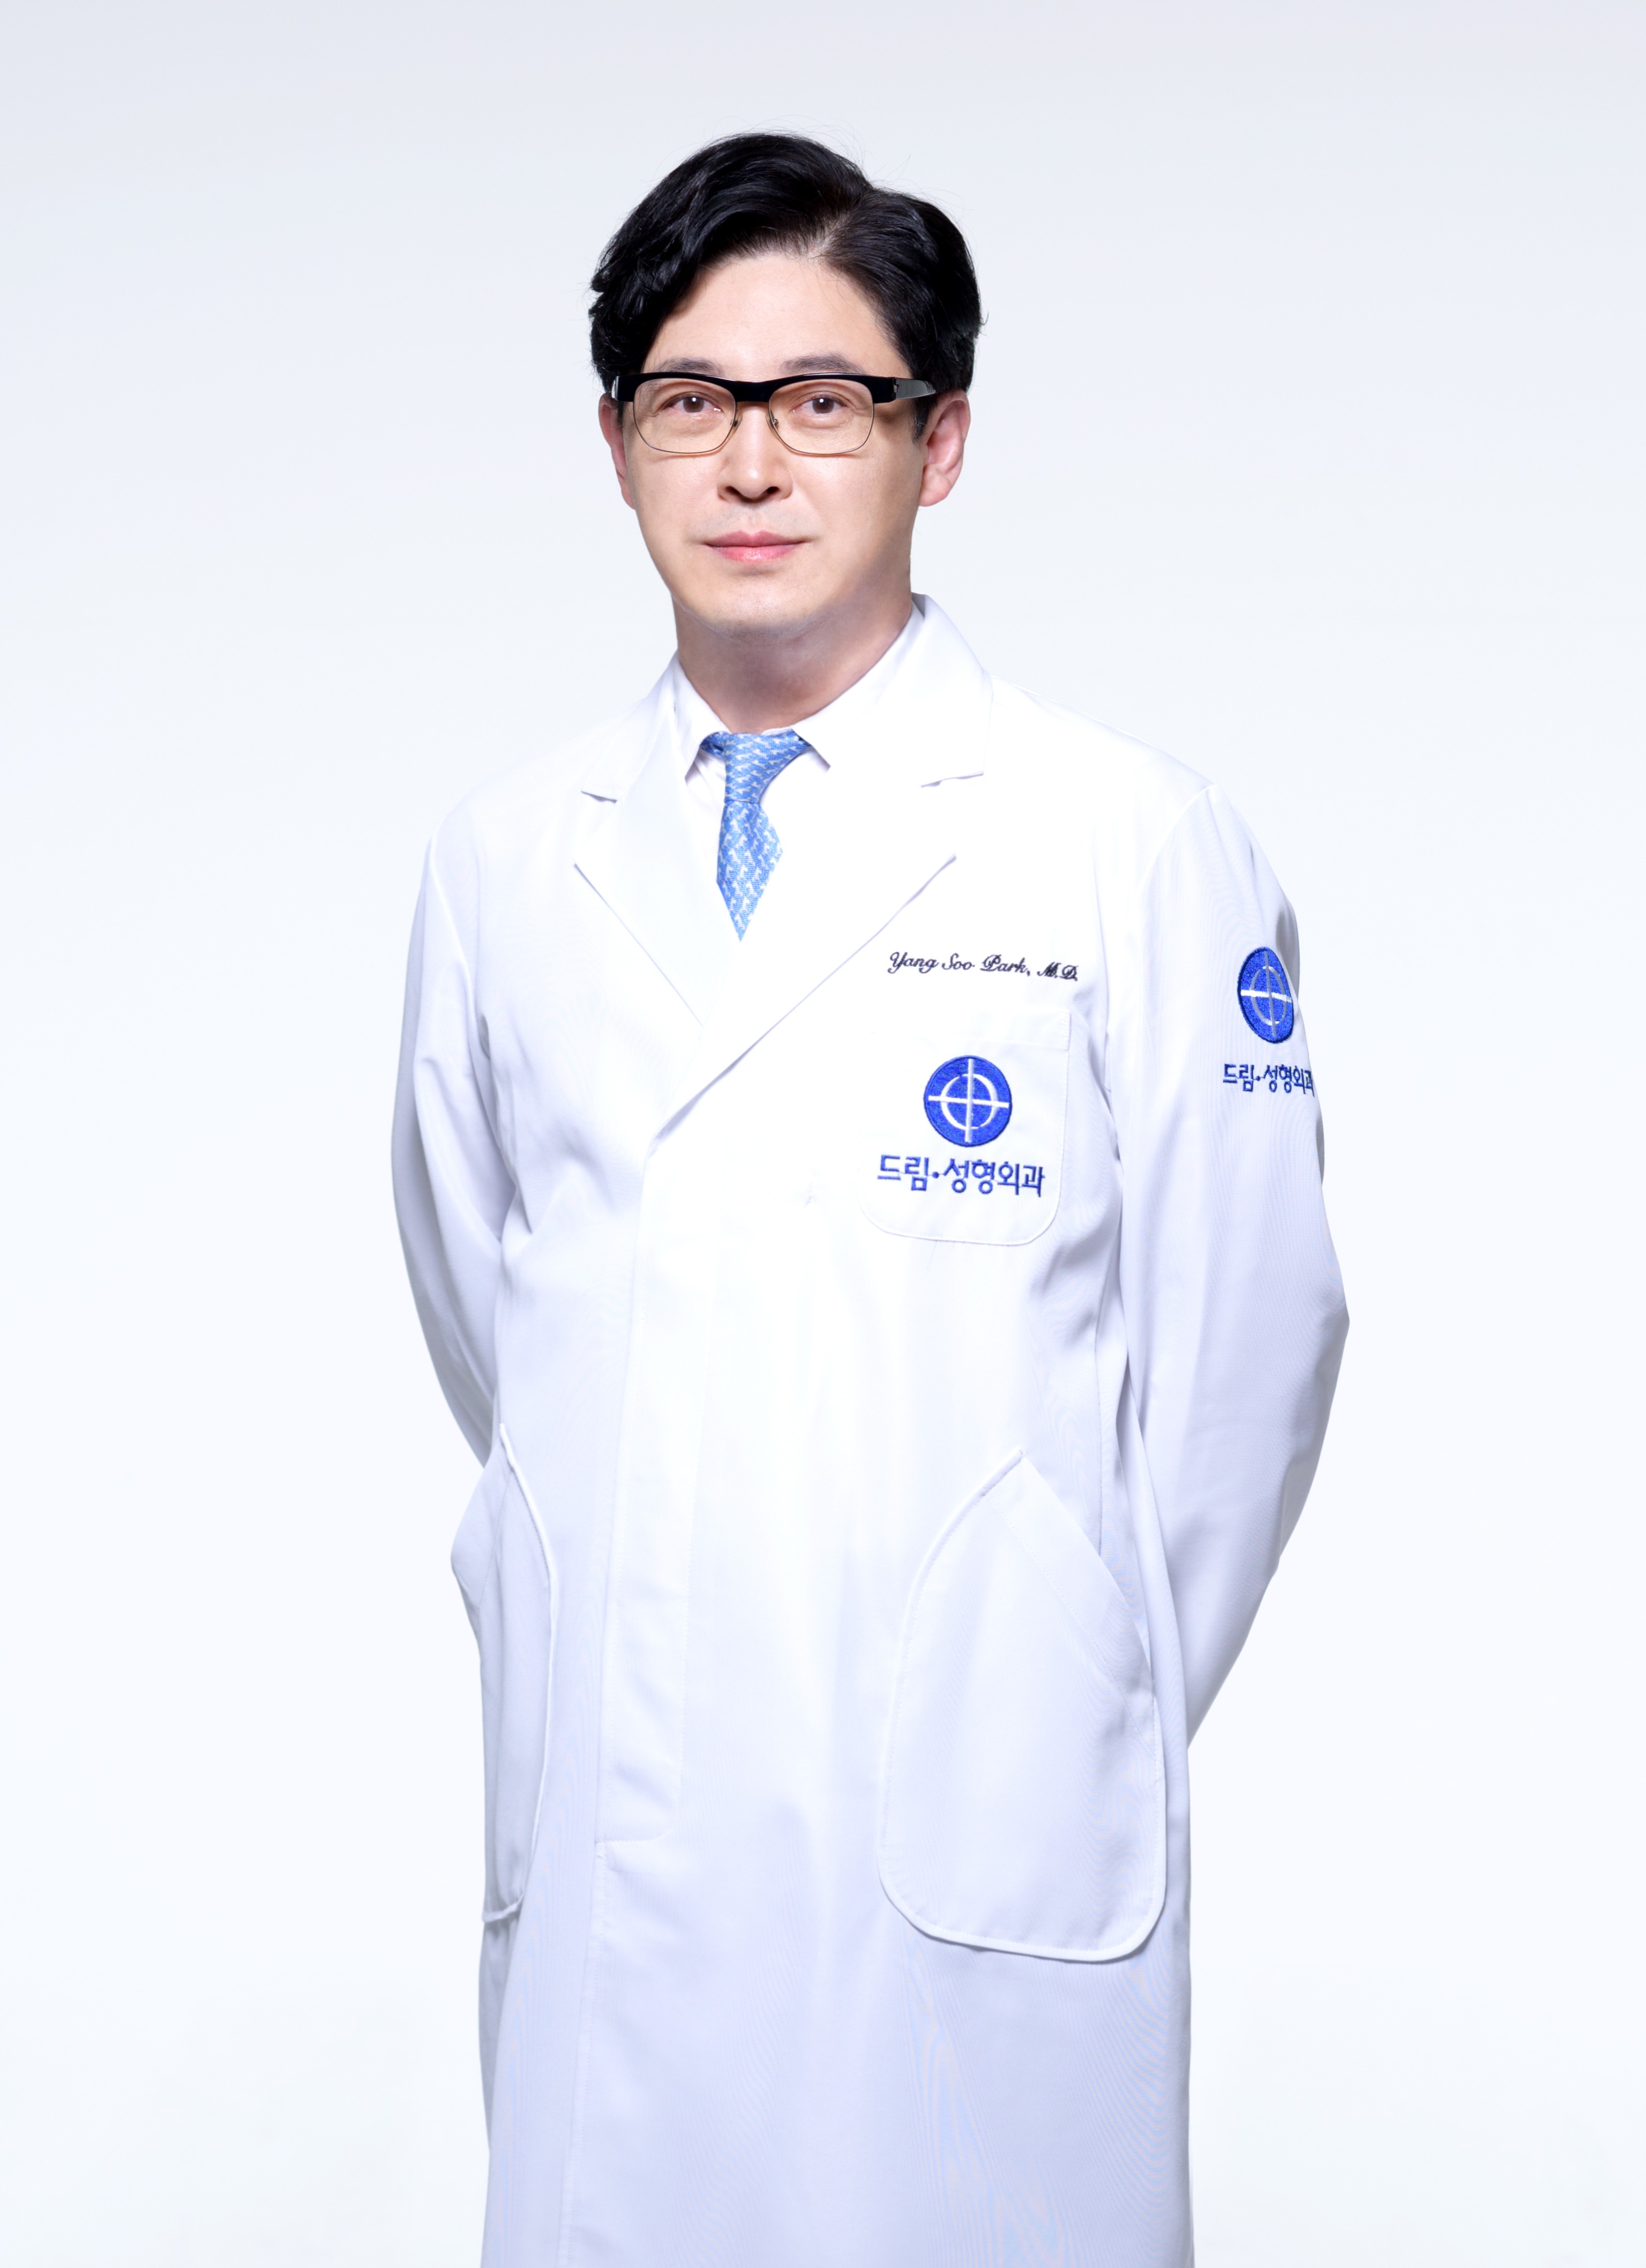 Dr Park Yang-soo, CEO of Dream Plastic Surgery